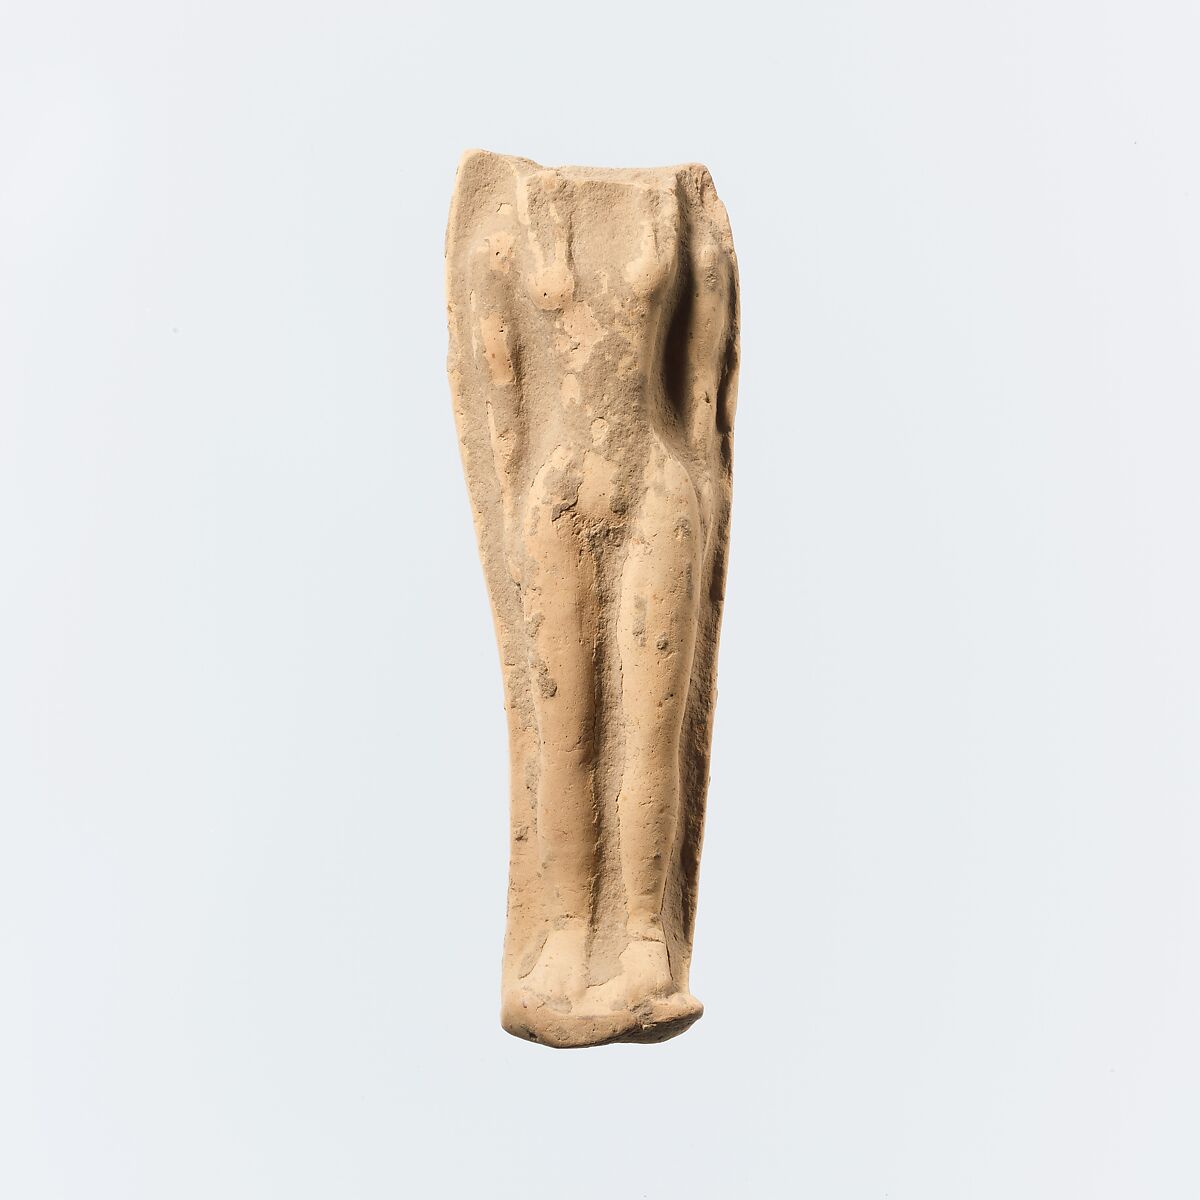 Terracotta statuette of a female figure, Terracotta, Greek, Cretan 